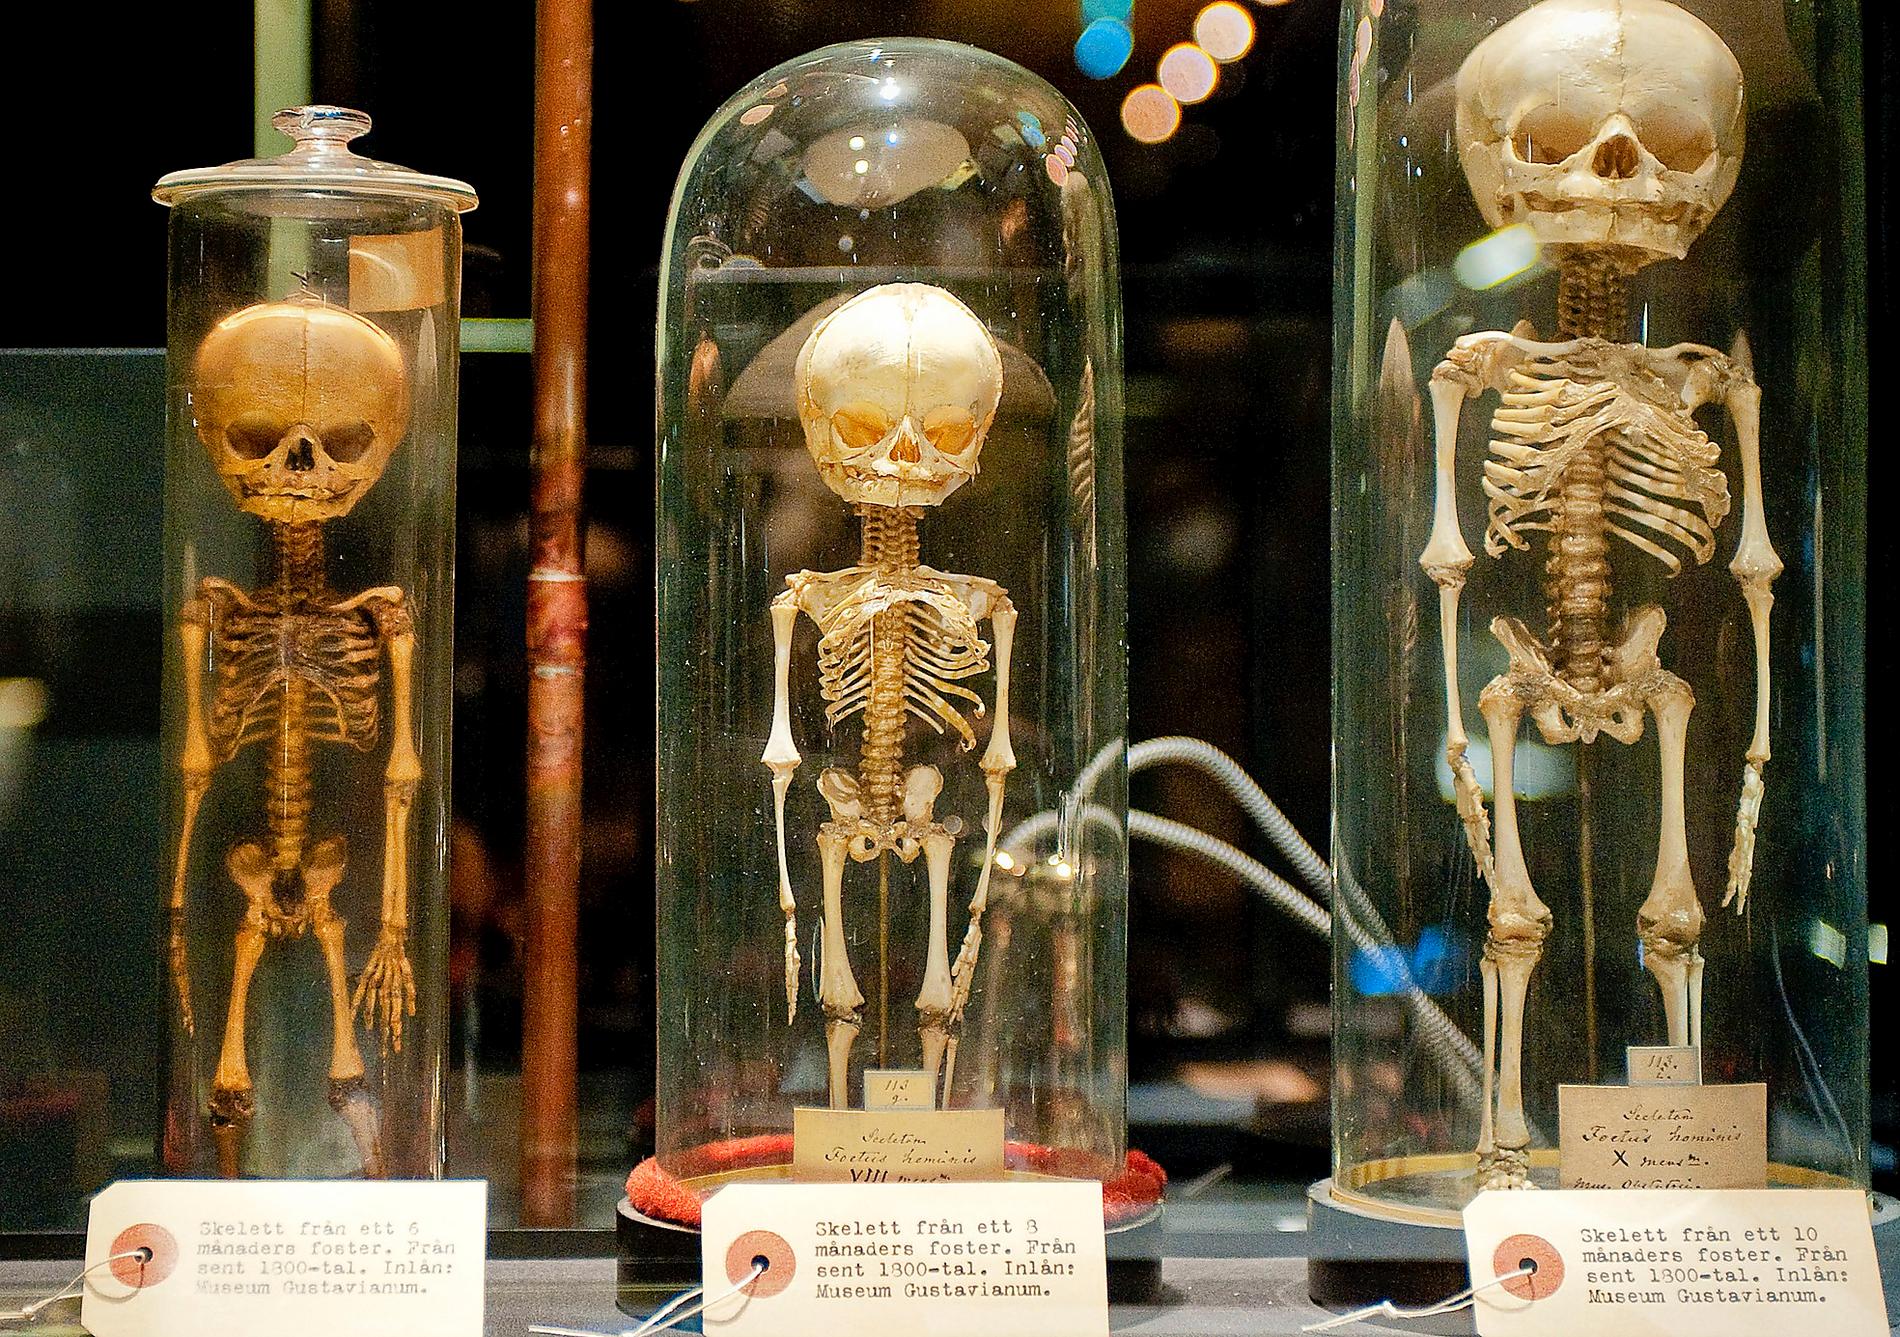 Skelett på etnografiska museet i Stockholm.